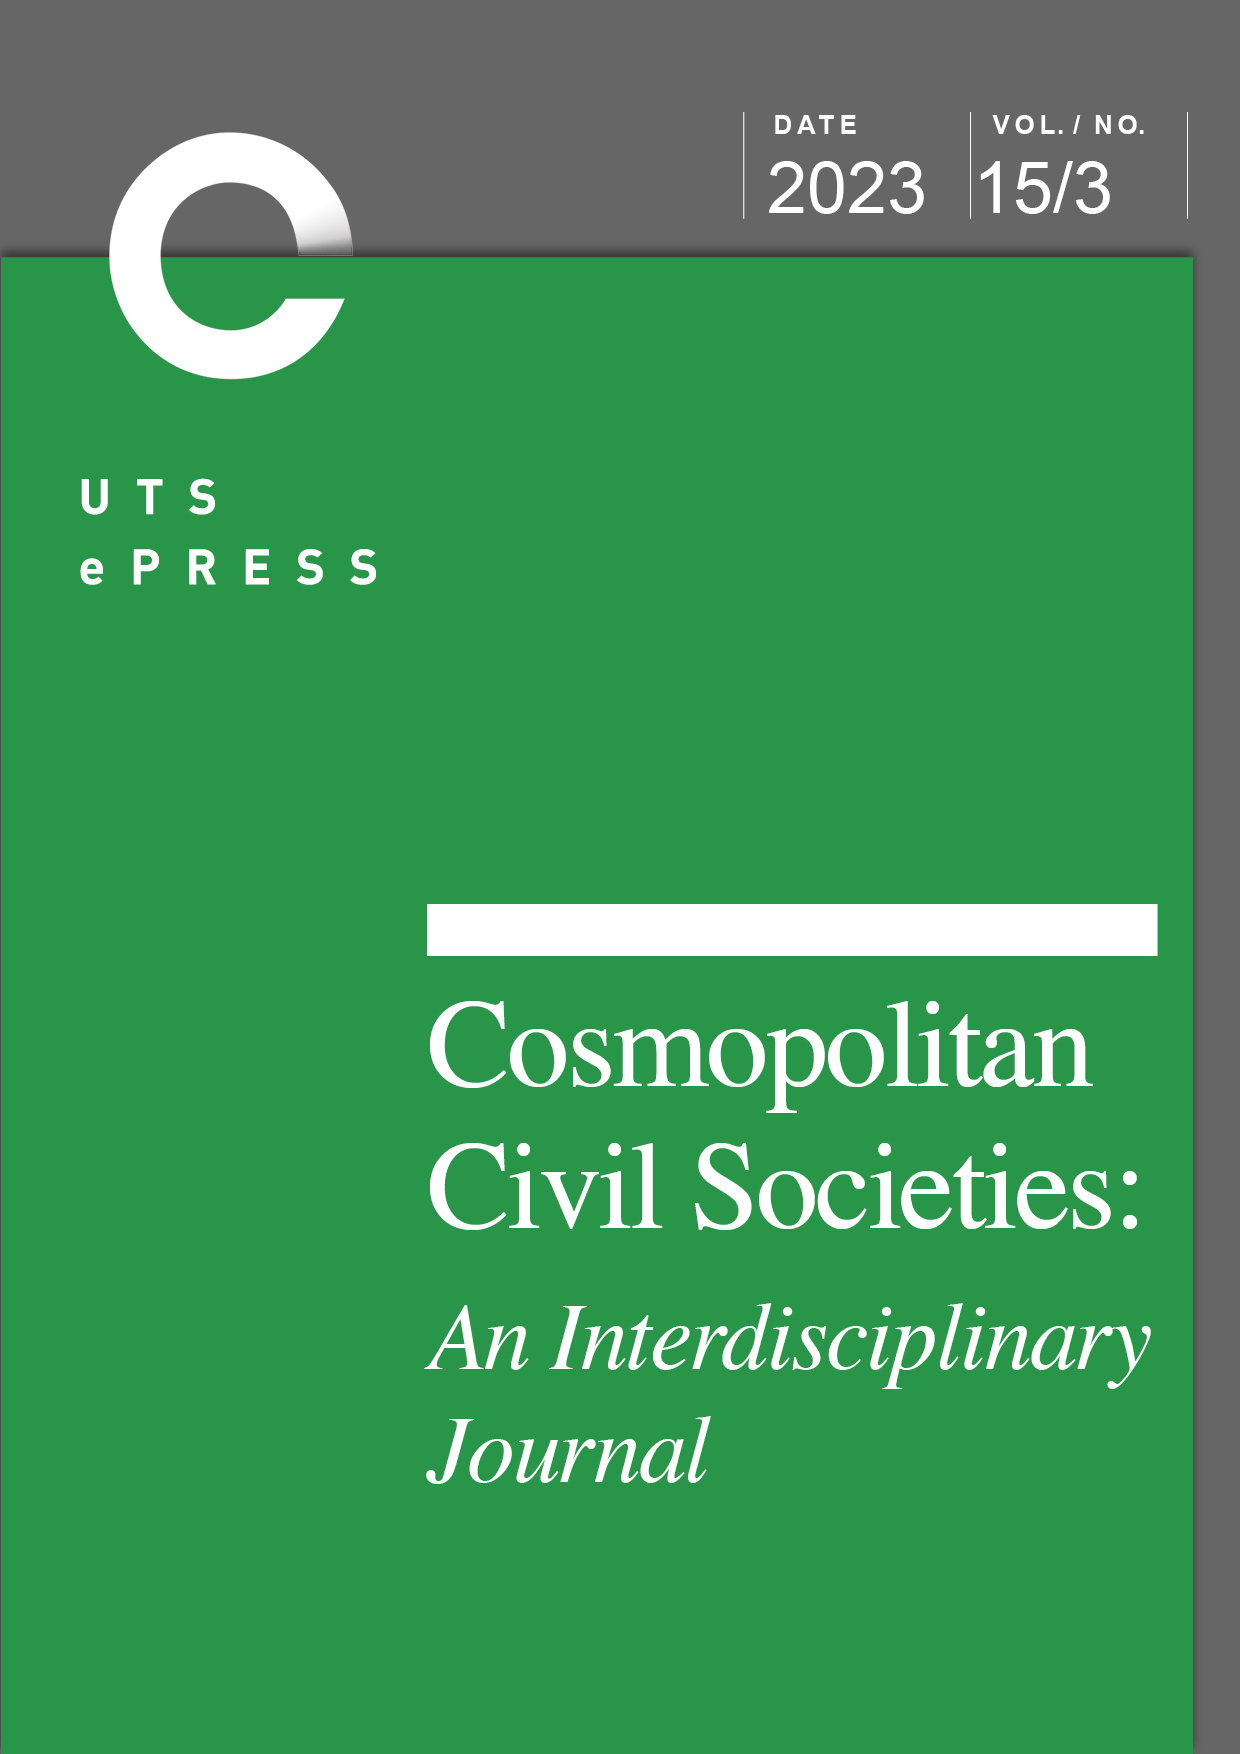 Cosmopolitan Civil Societies Journal cover Vol 14 No 1 2022